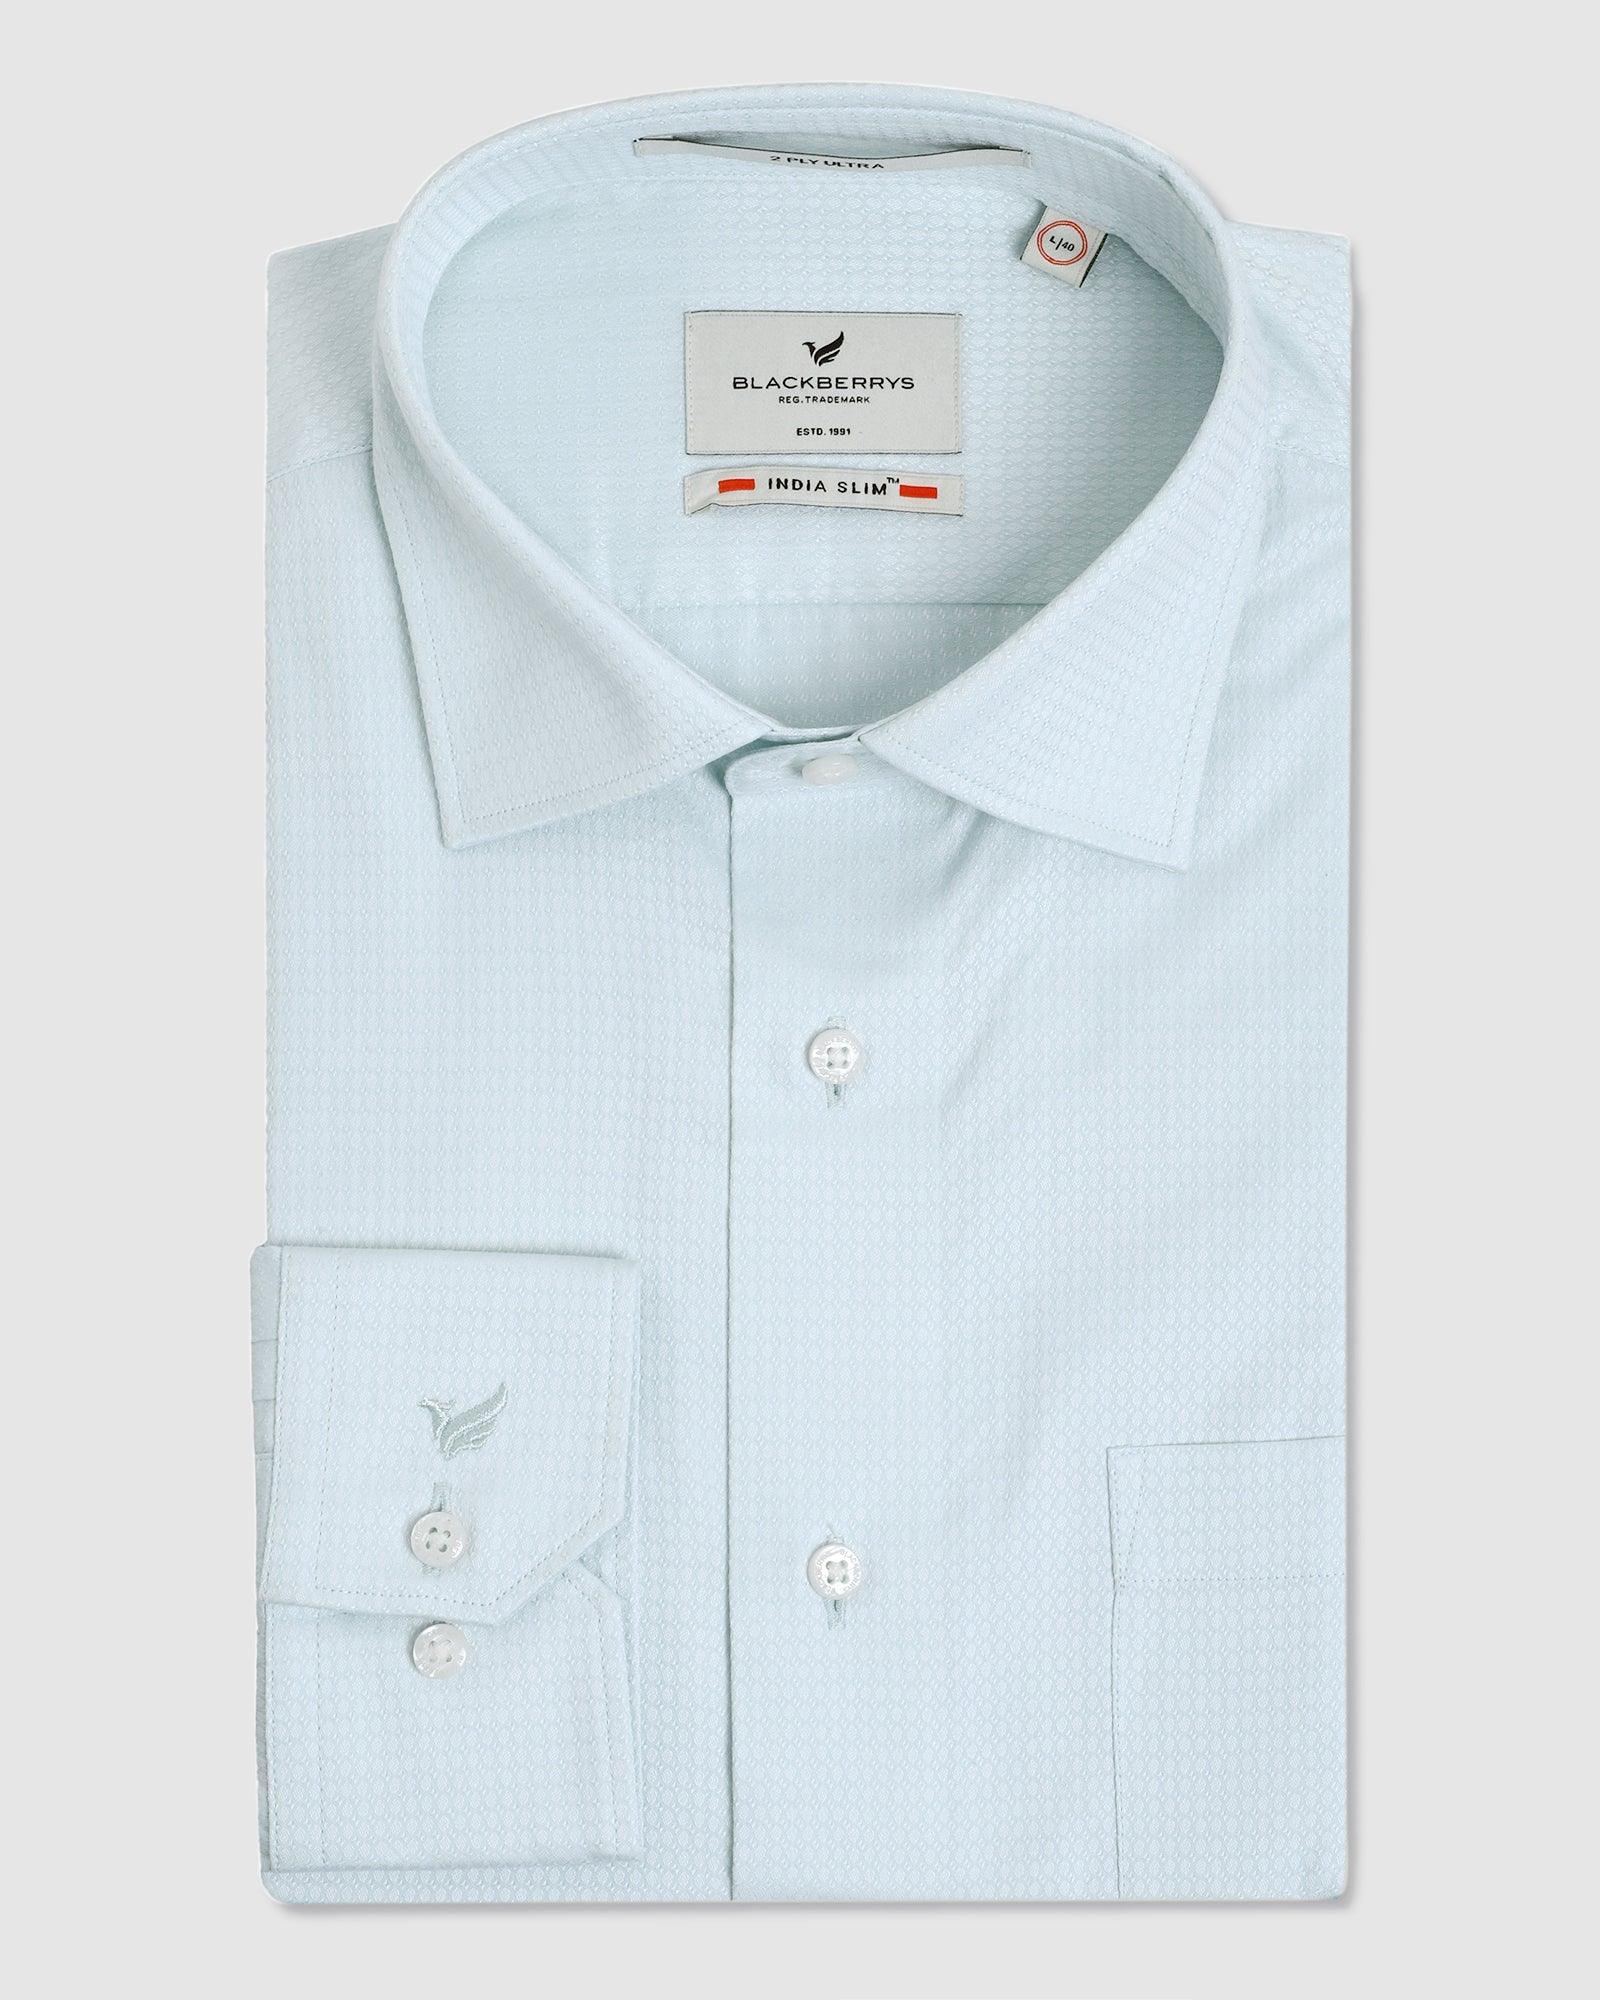 Formal Teal Textured Shirt - Gibbs